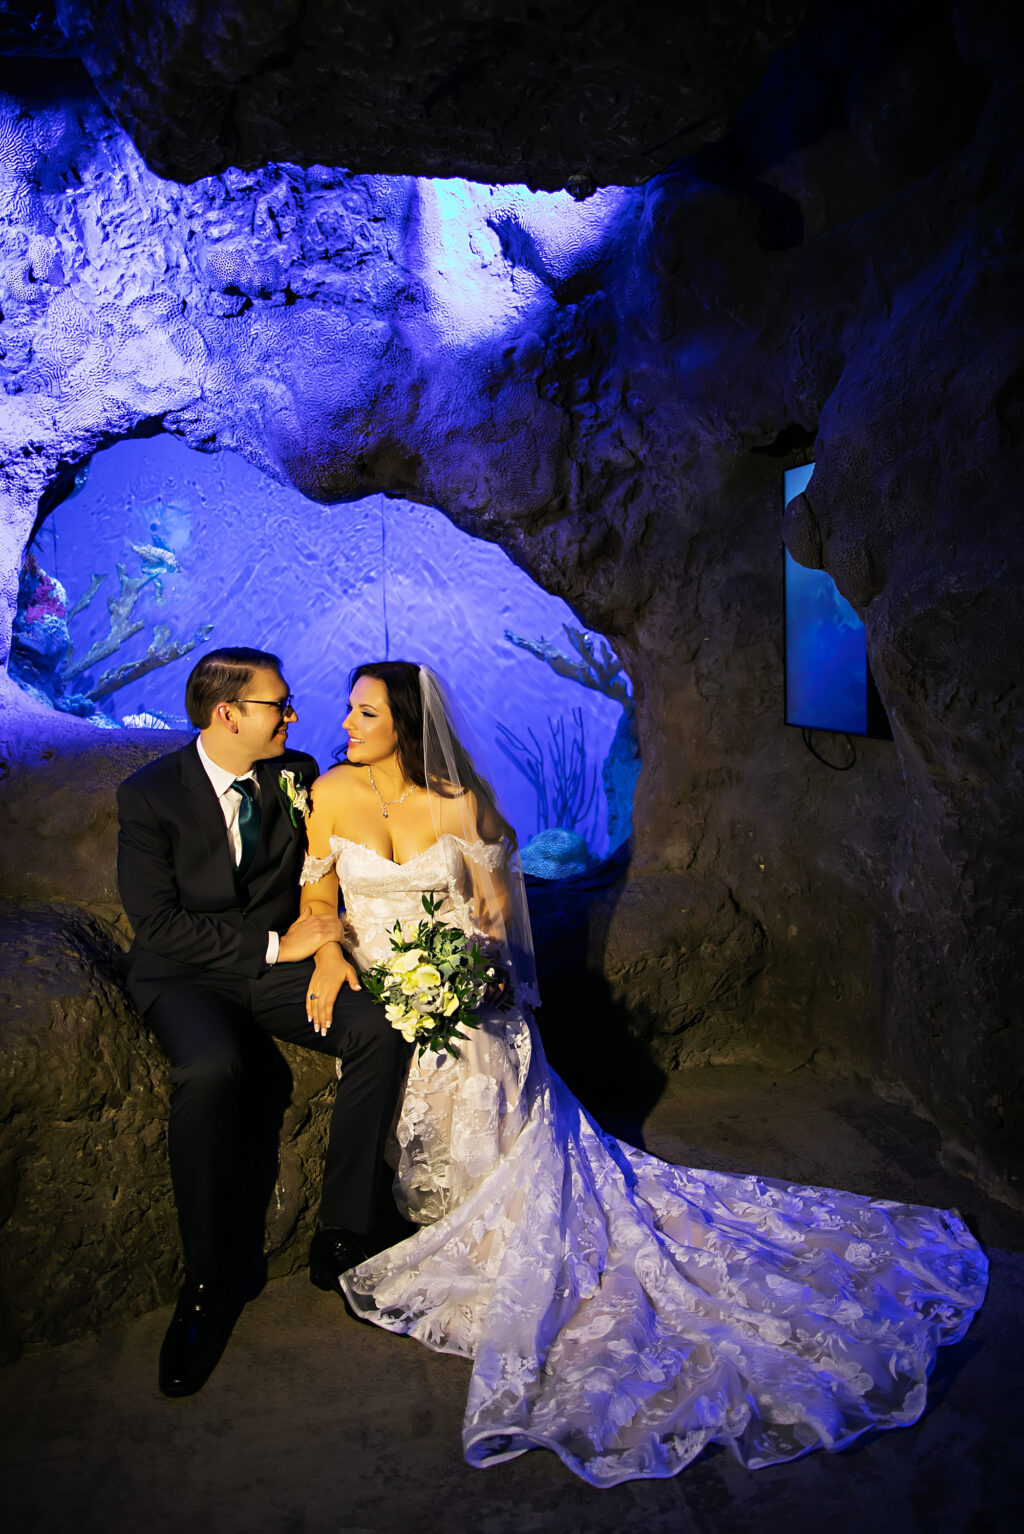 Bride and Groom Wedding Portrait in the Florida Aquarium | Florida Photographer Limelight Photography